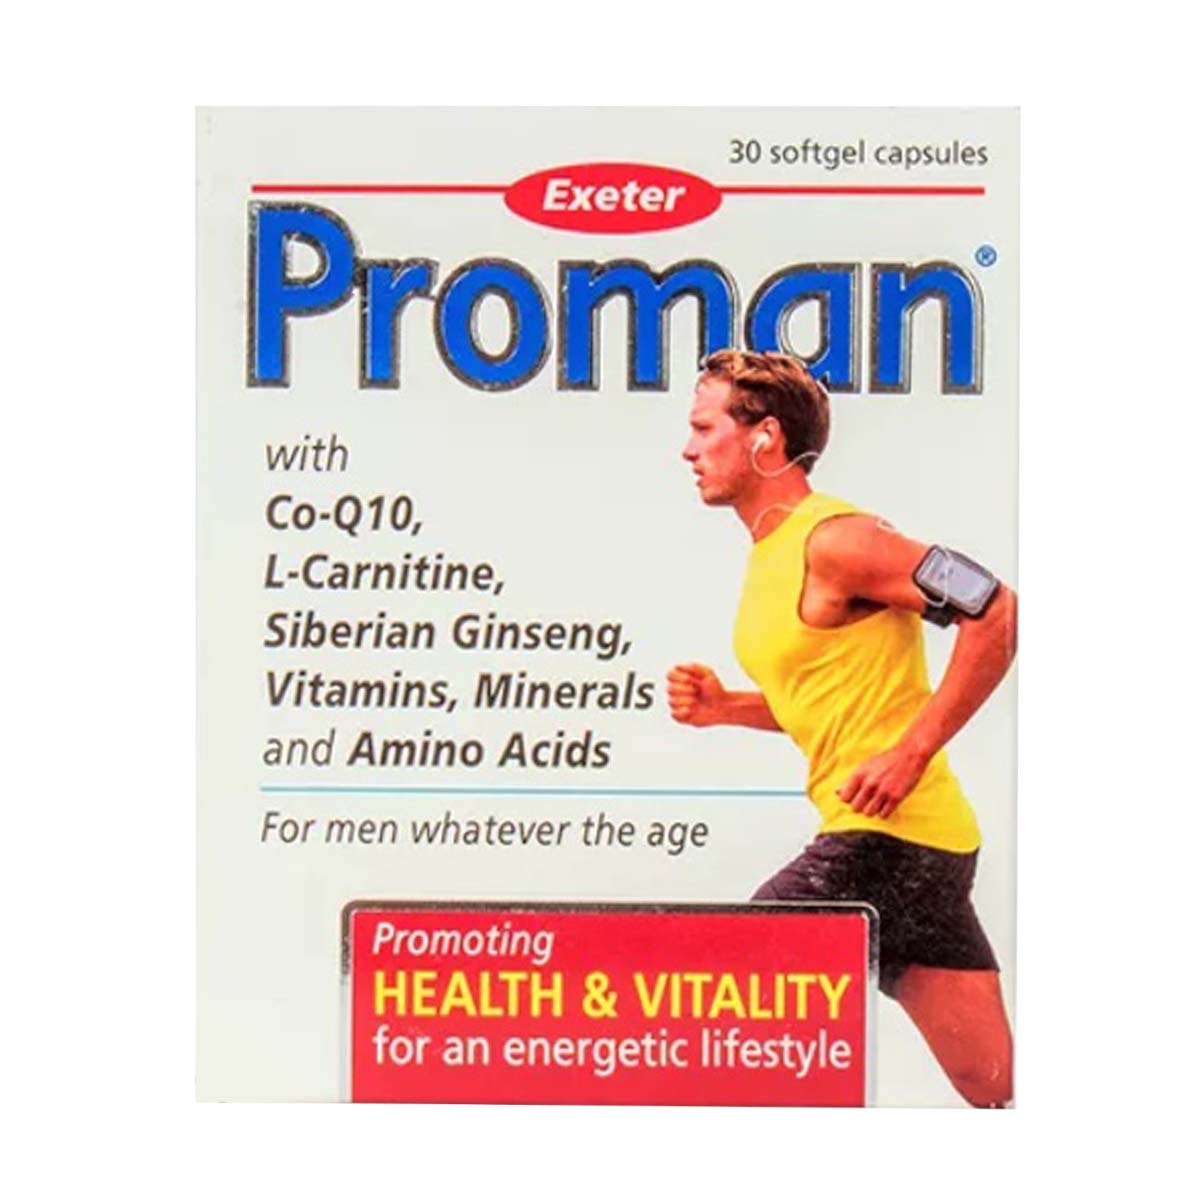 Proman - Pronatural